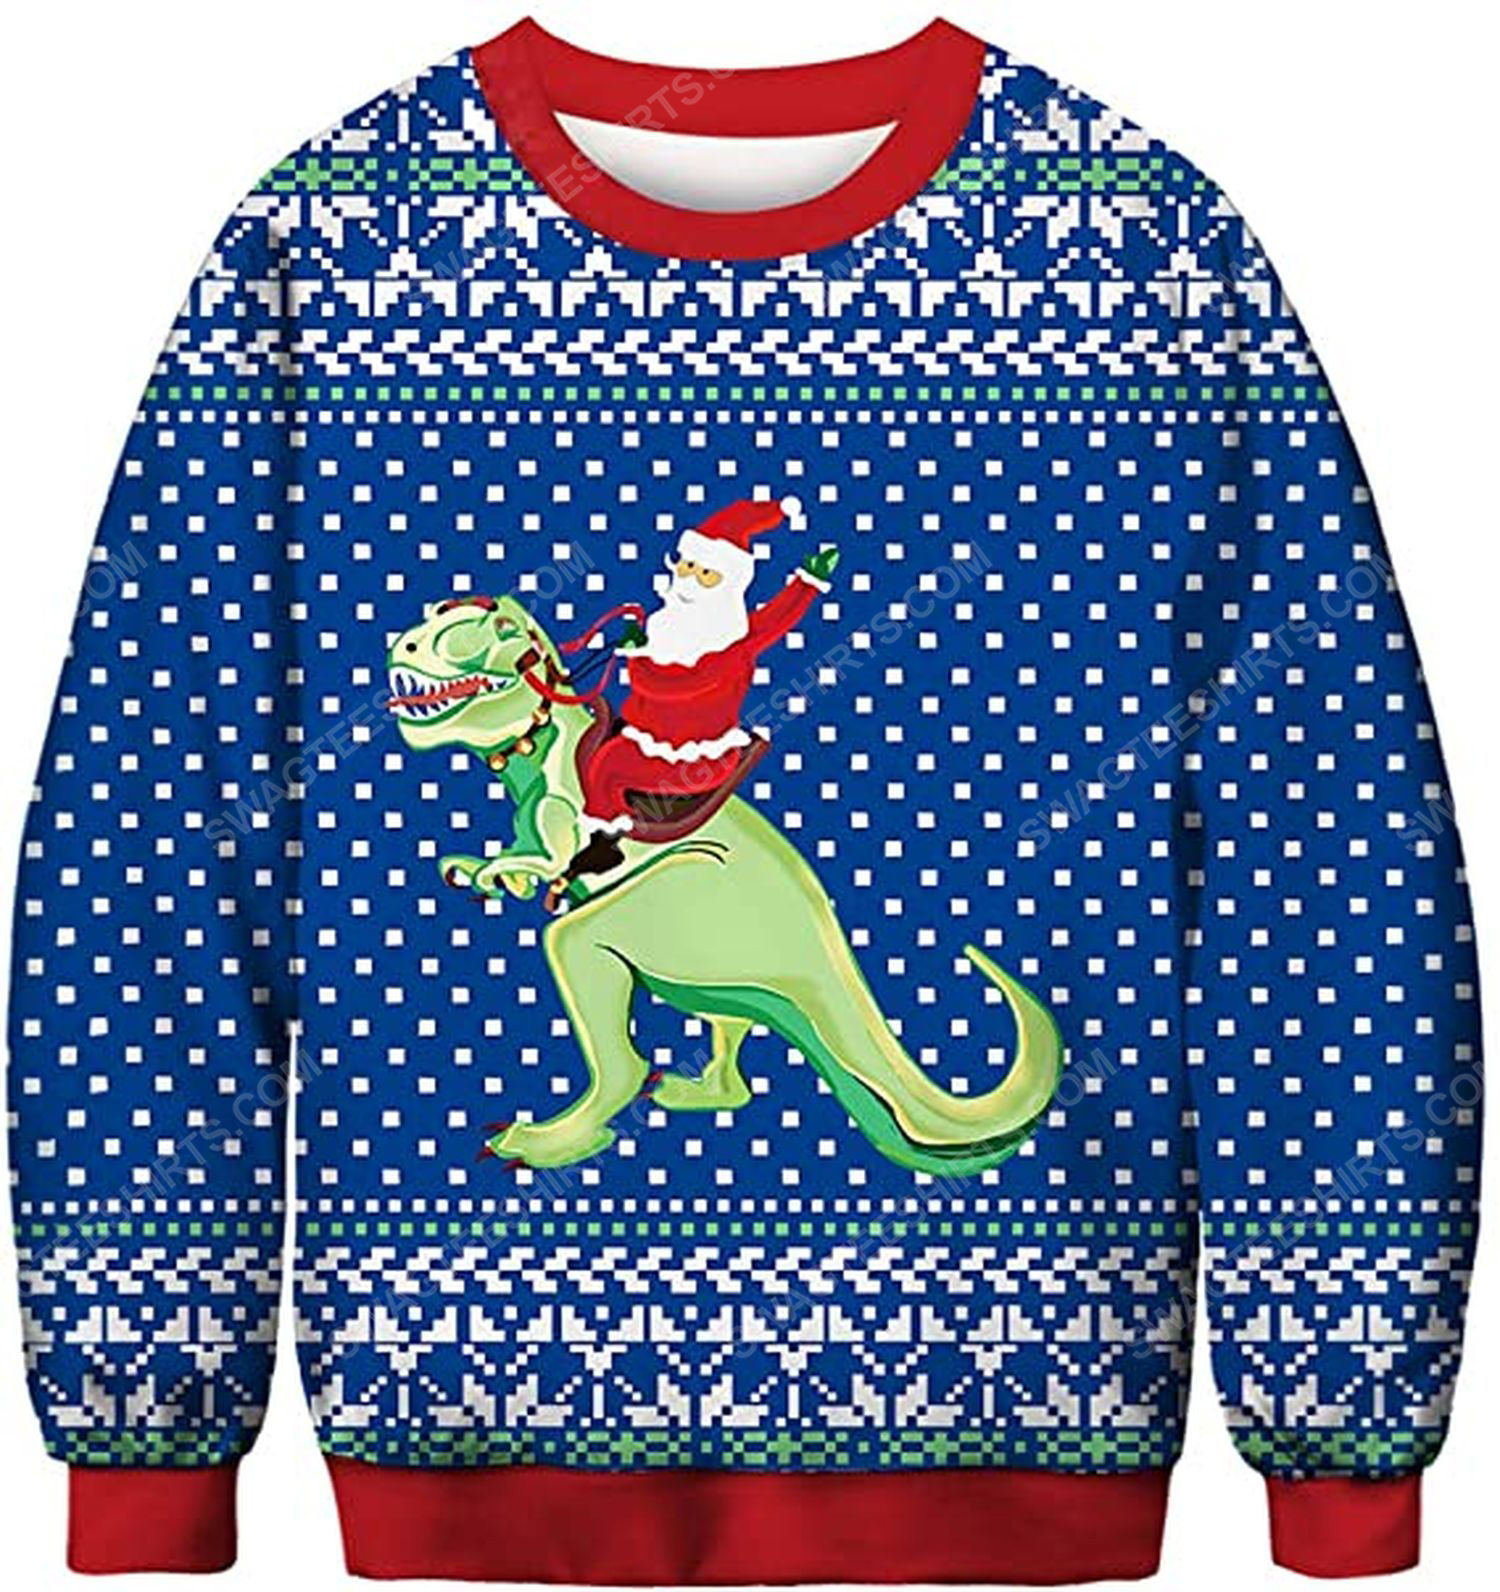 [special edition] Santa claus riding a dinosaur full print ugly christmas sweater – maria